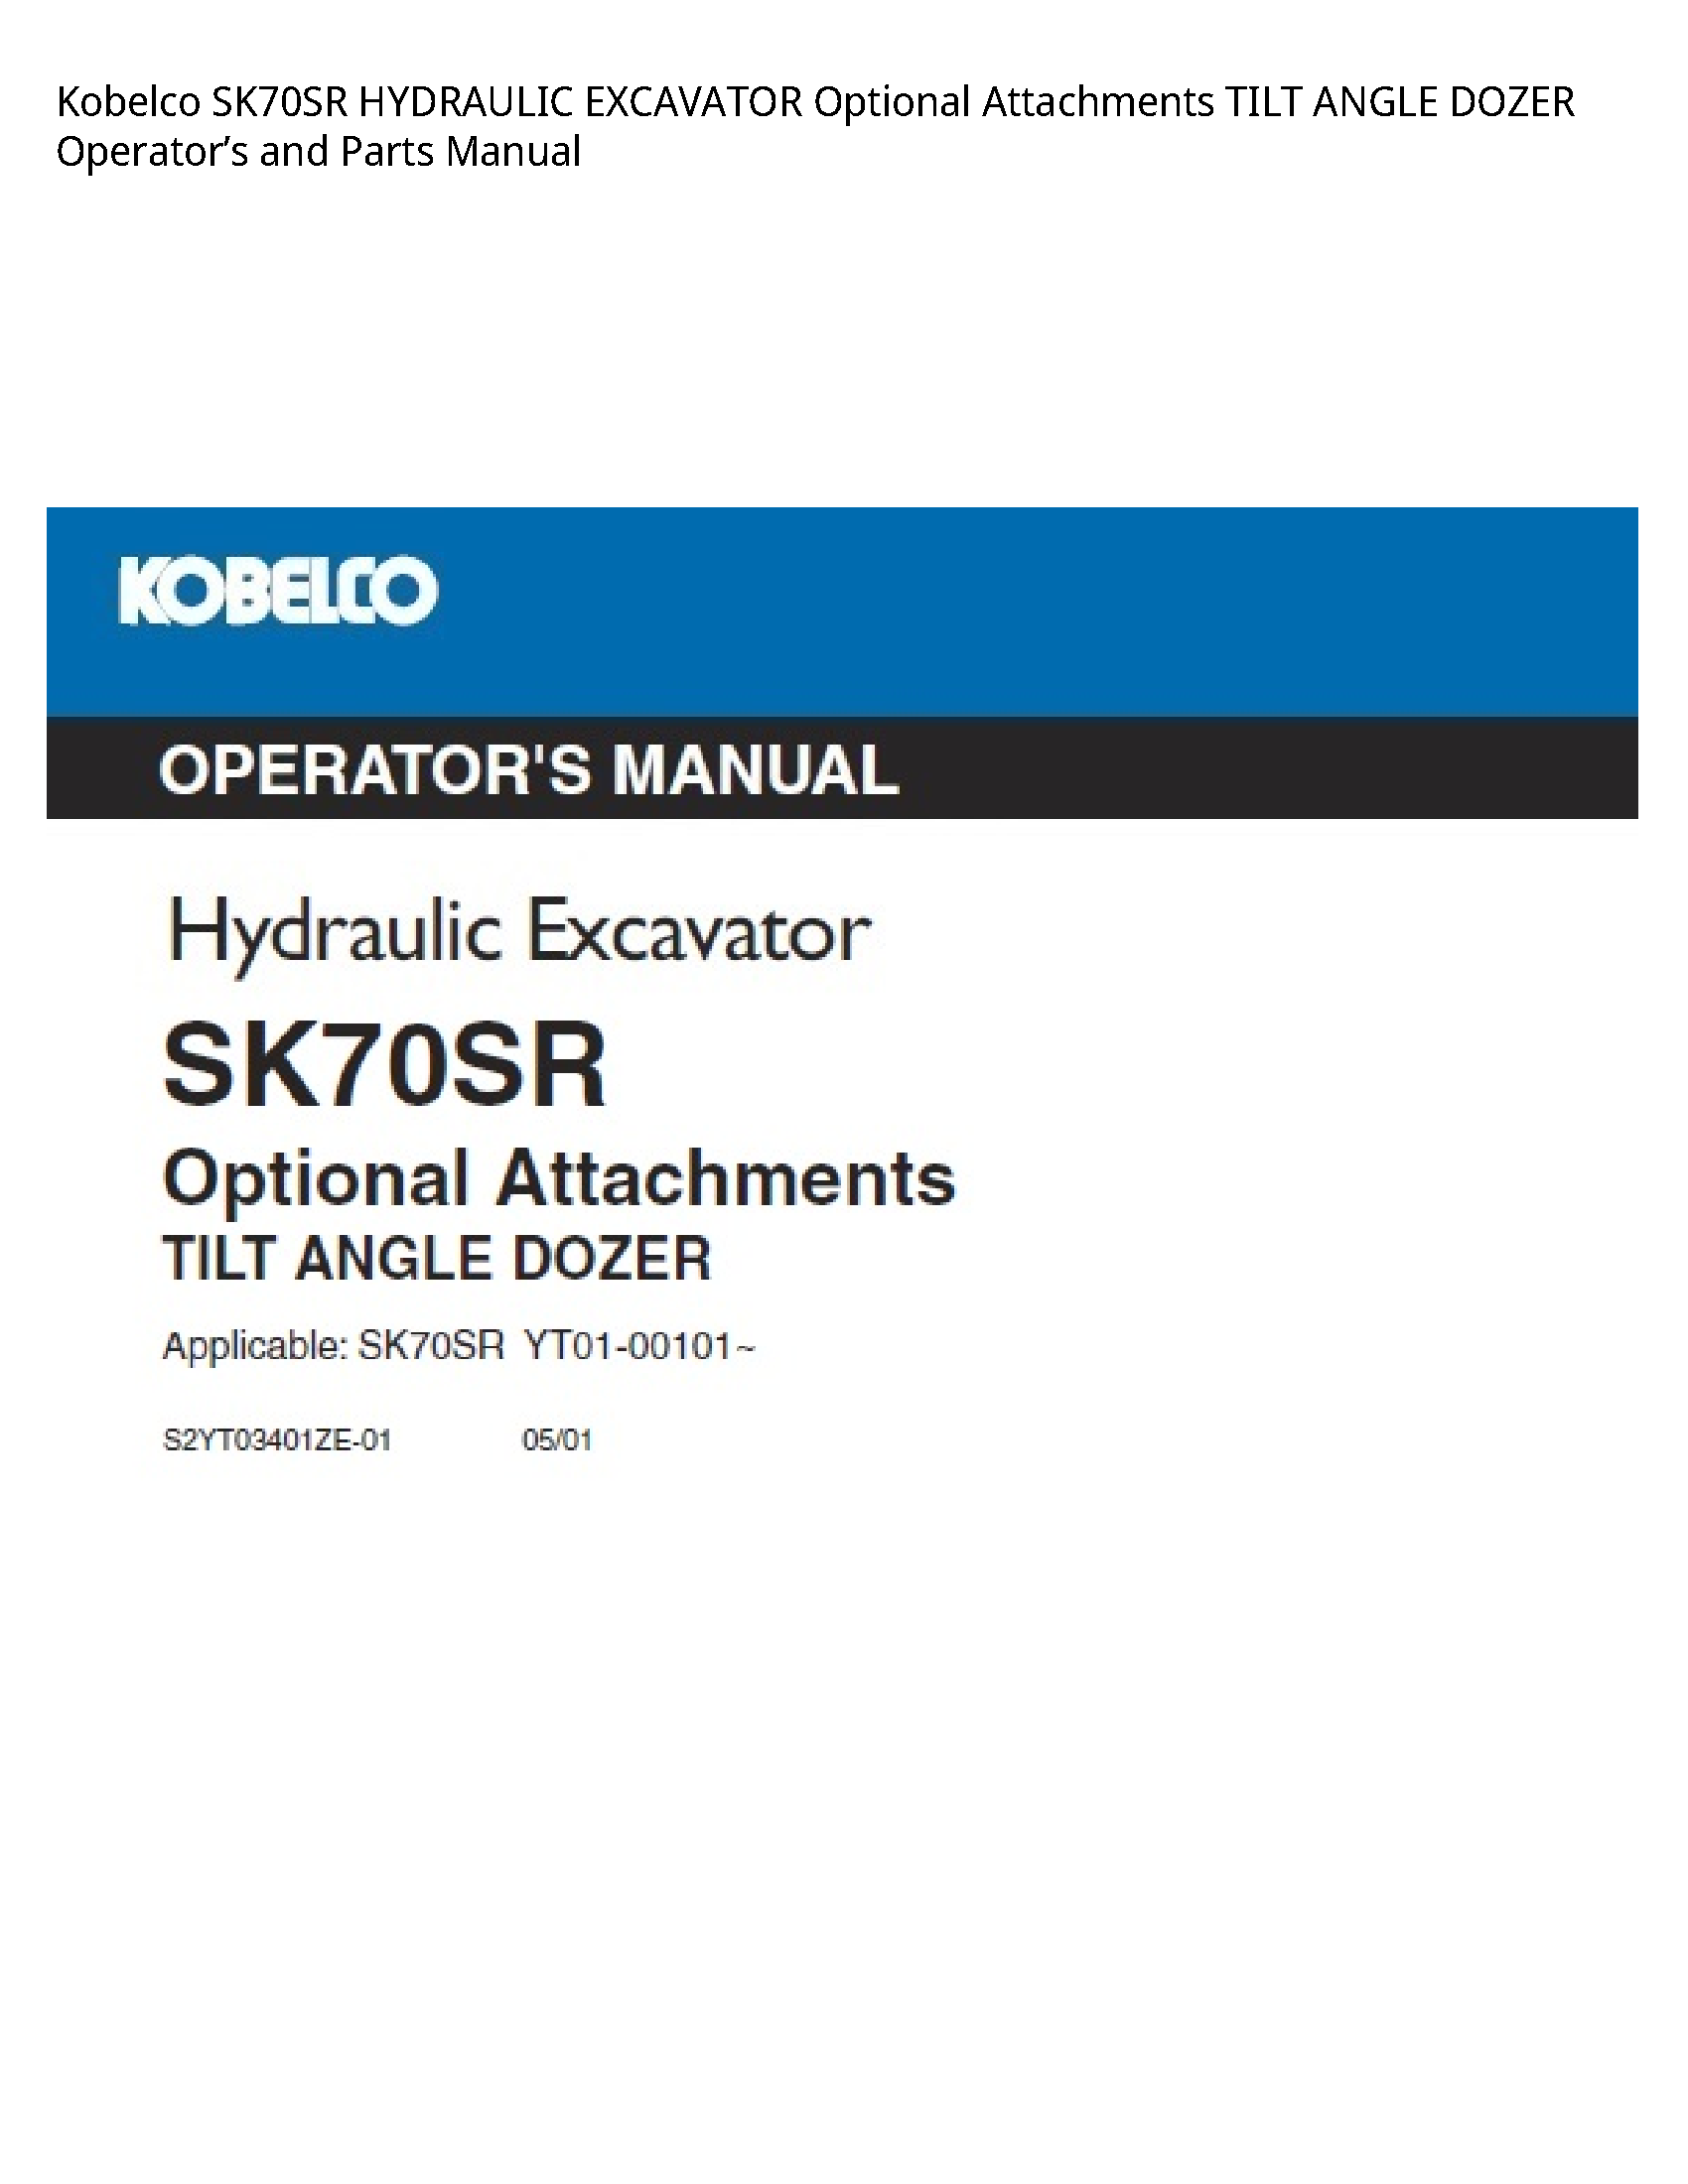 Kobelco SK70SR HYDRAULIC EXCAVATOR Optional Attachments TILT ANGLE DOZER Operator’s  Parts manual